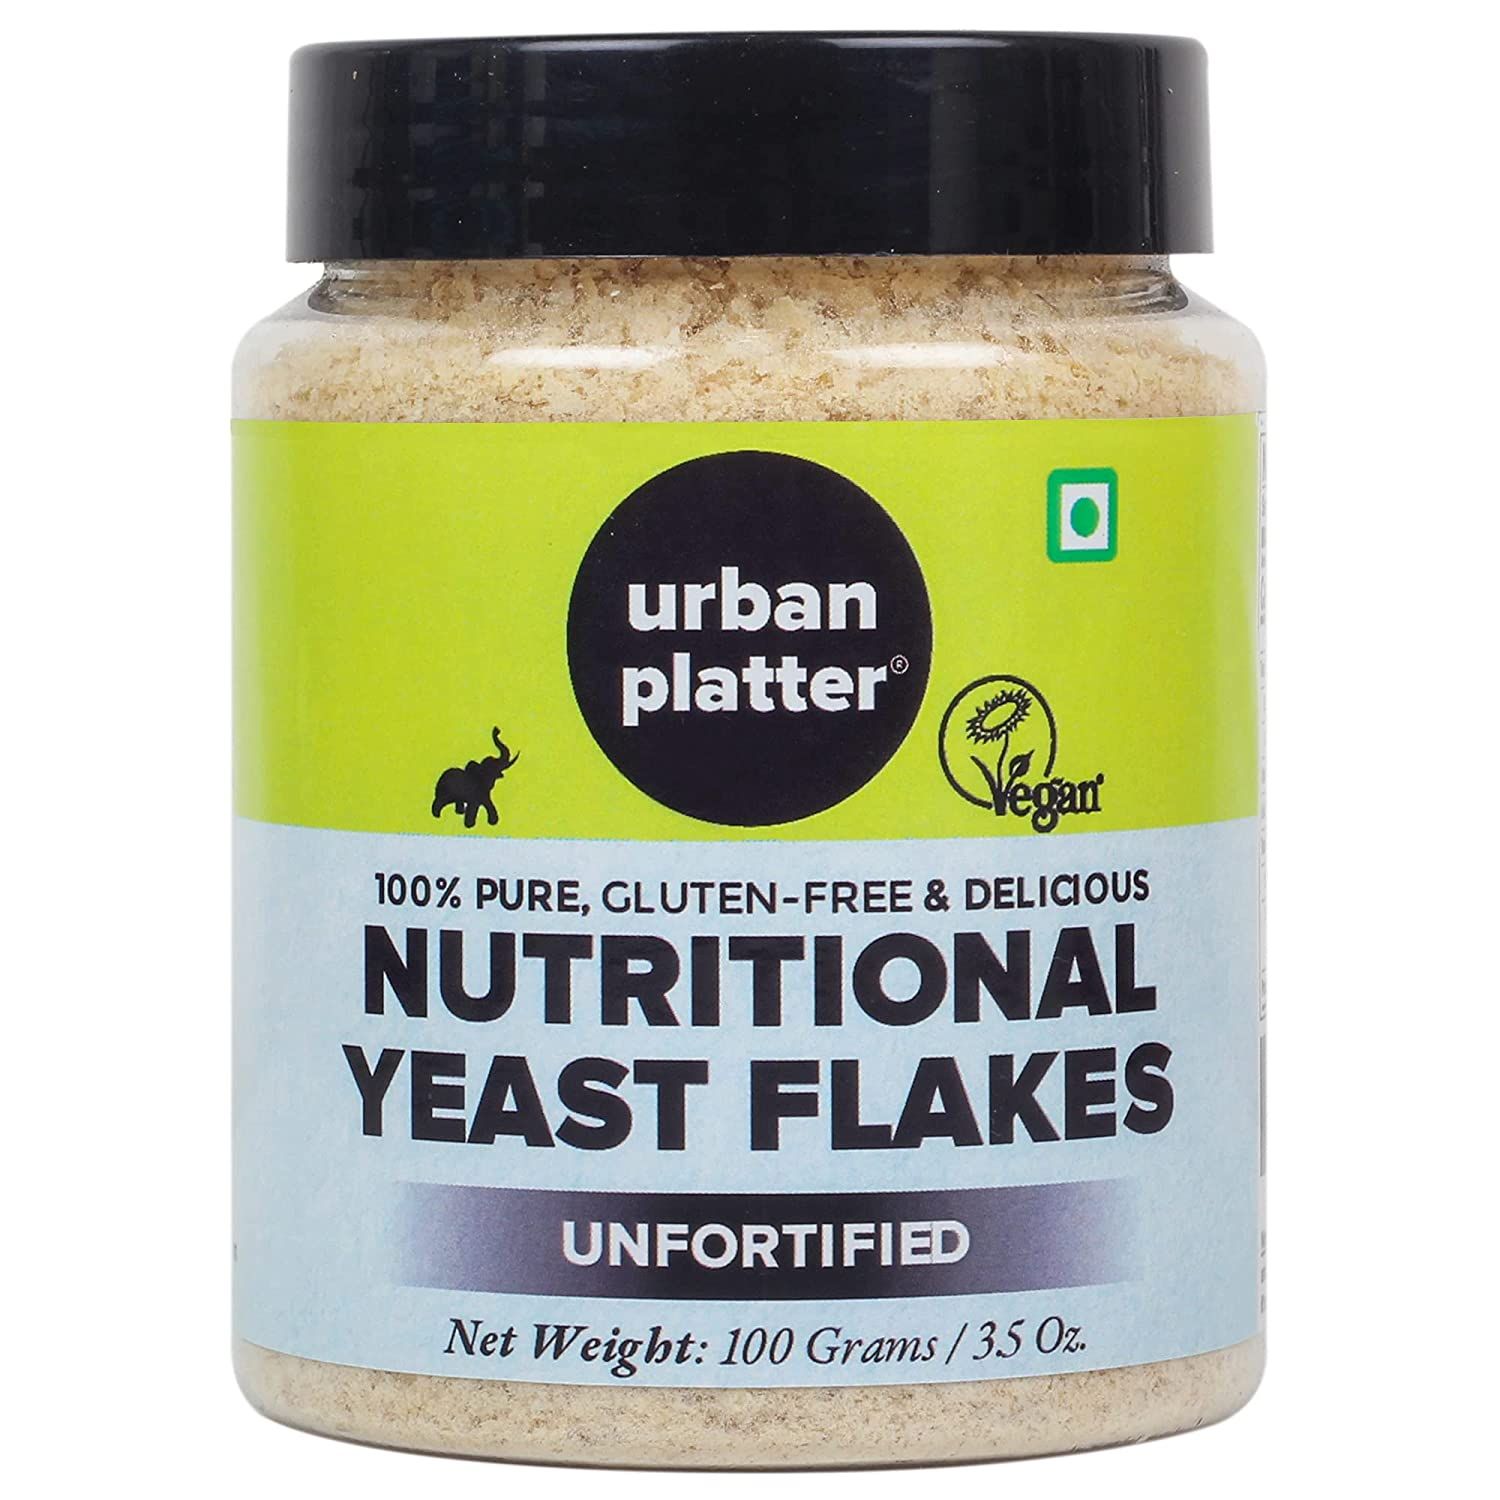 Urban Platter Unfortified Yeast Flakes Image